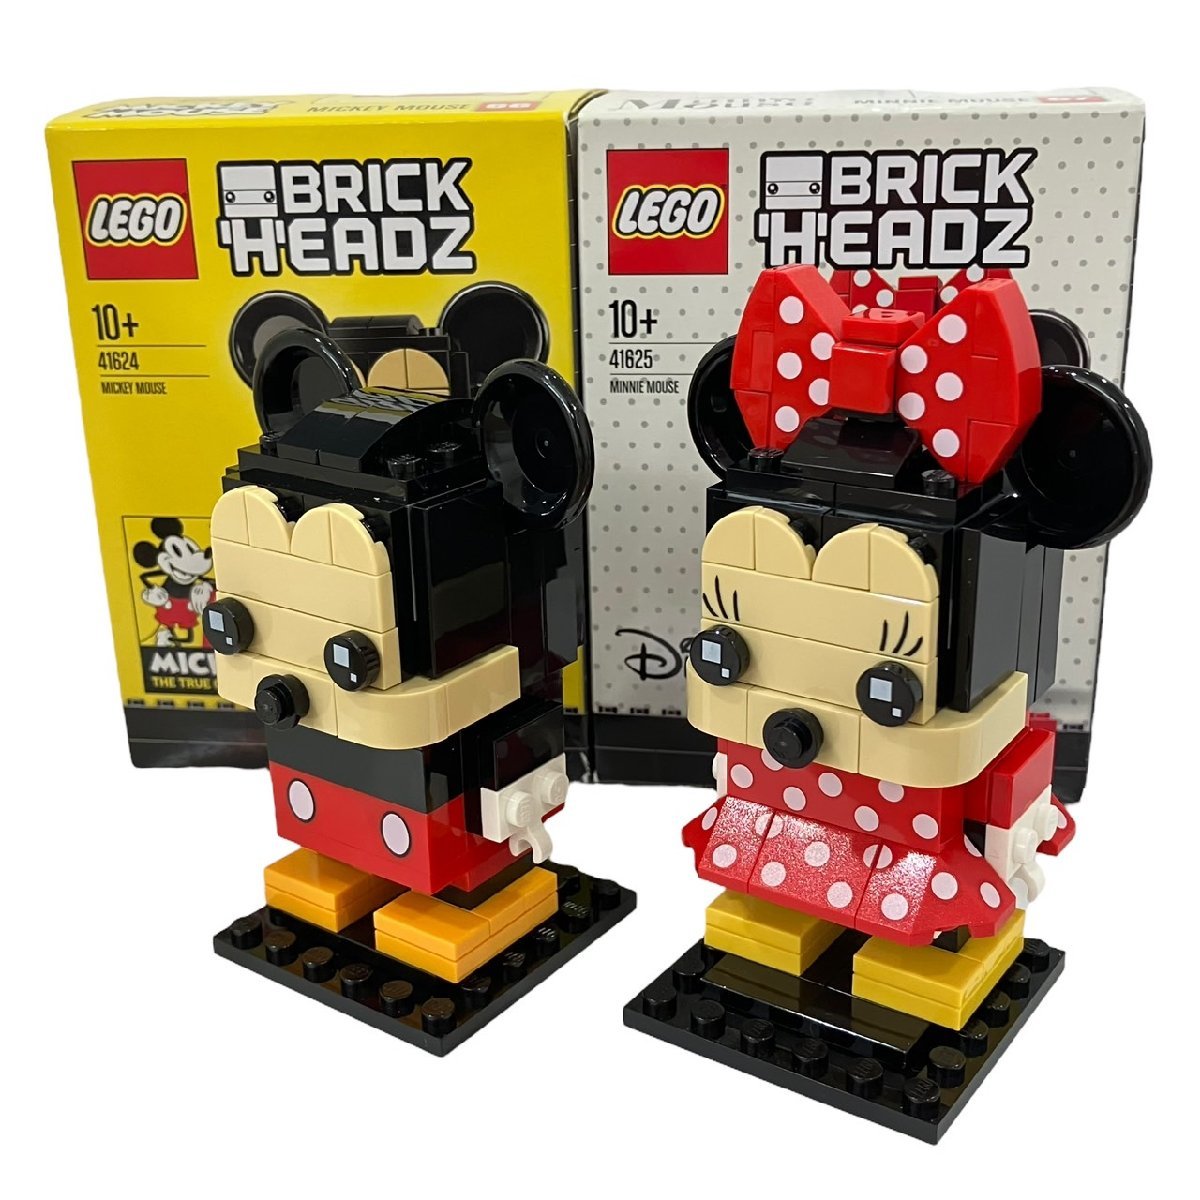 LEGO BRICK HEADZ Disney MICKYMOUSW ミッキー MinnieMouse ミニー 41624 61625_画像1